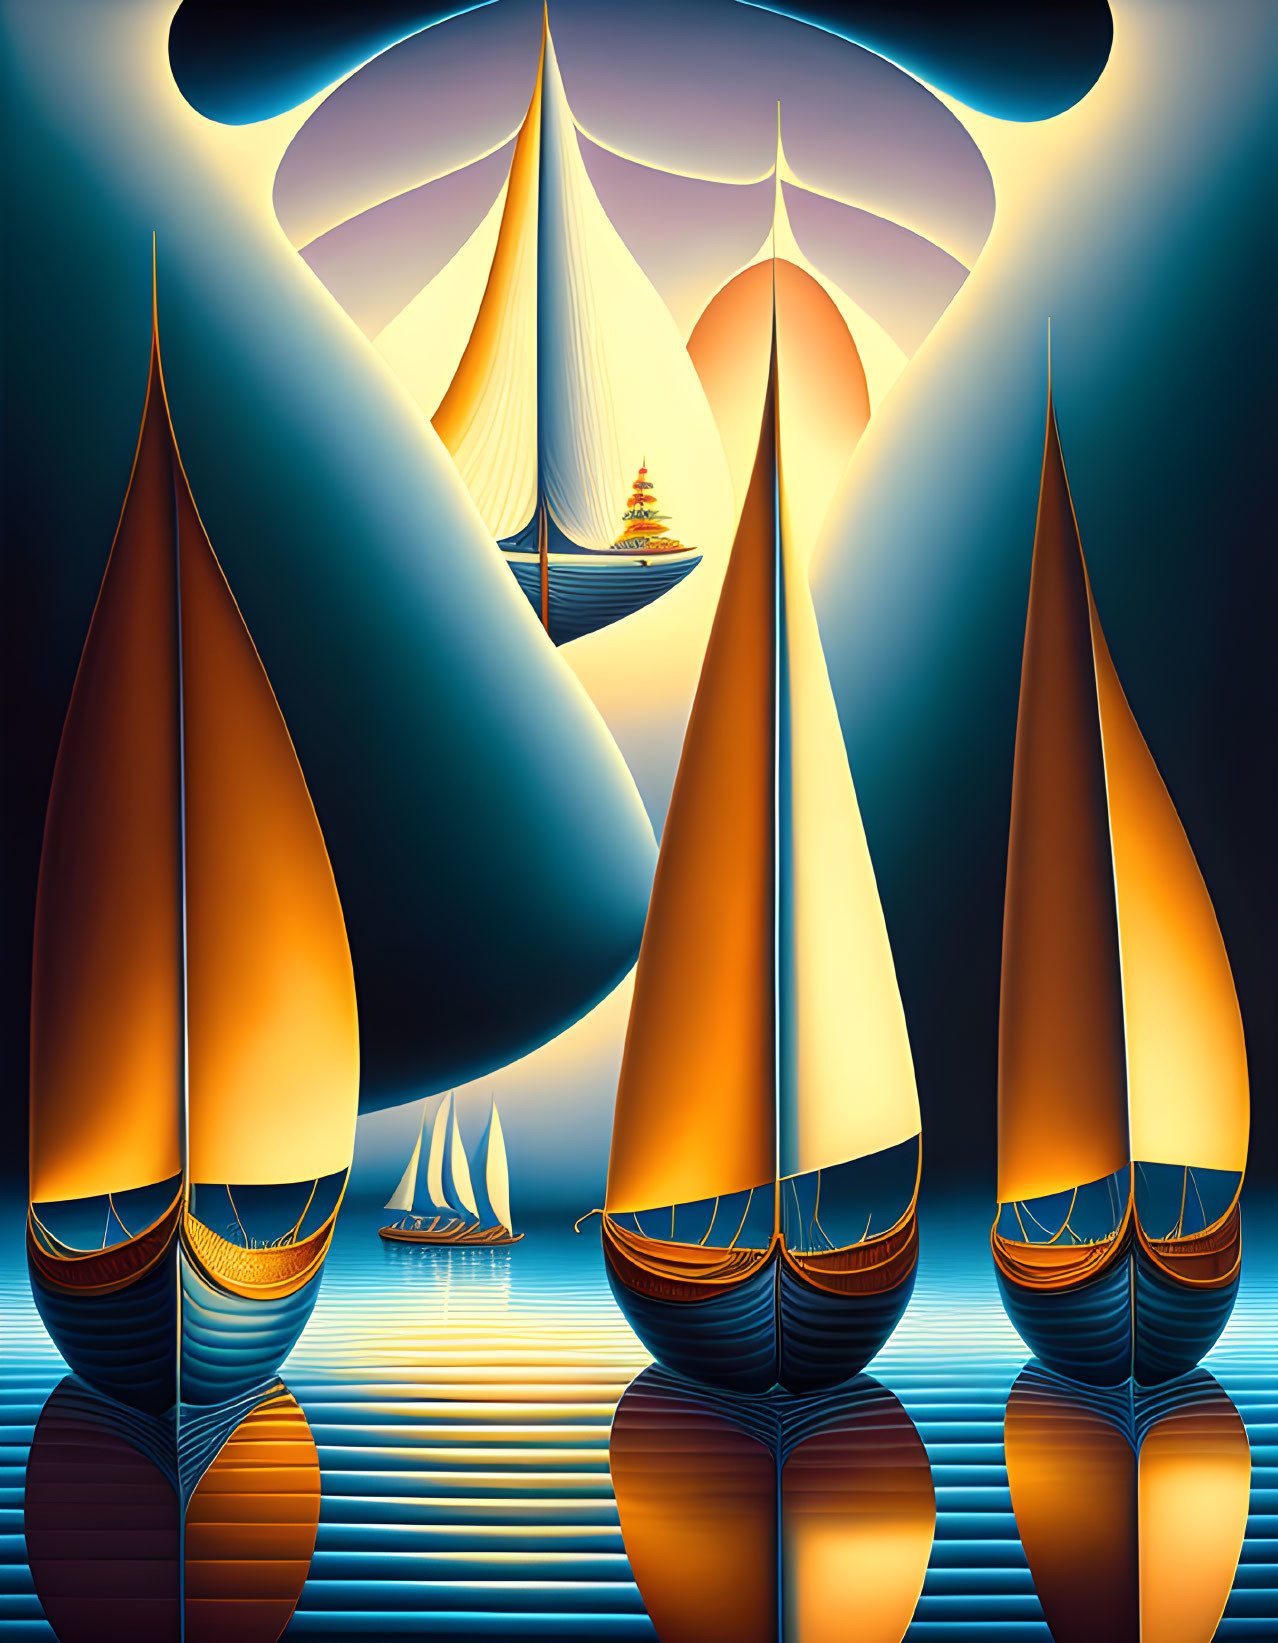 Golden sailboats in surreal digital art on stylized blue ocean